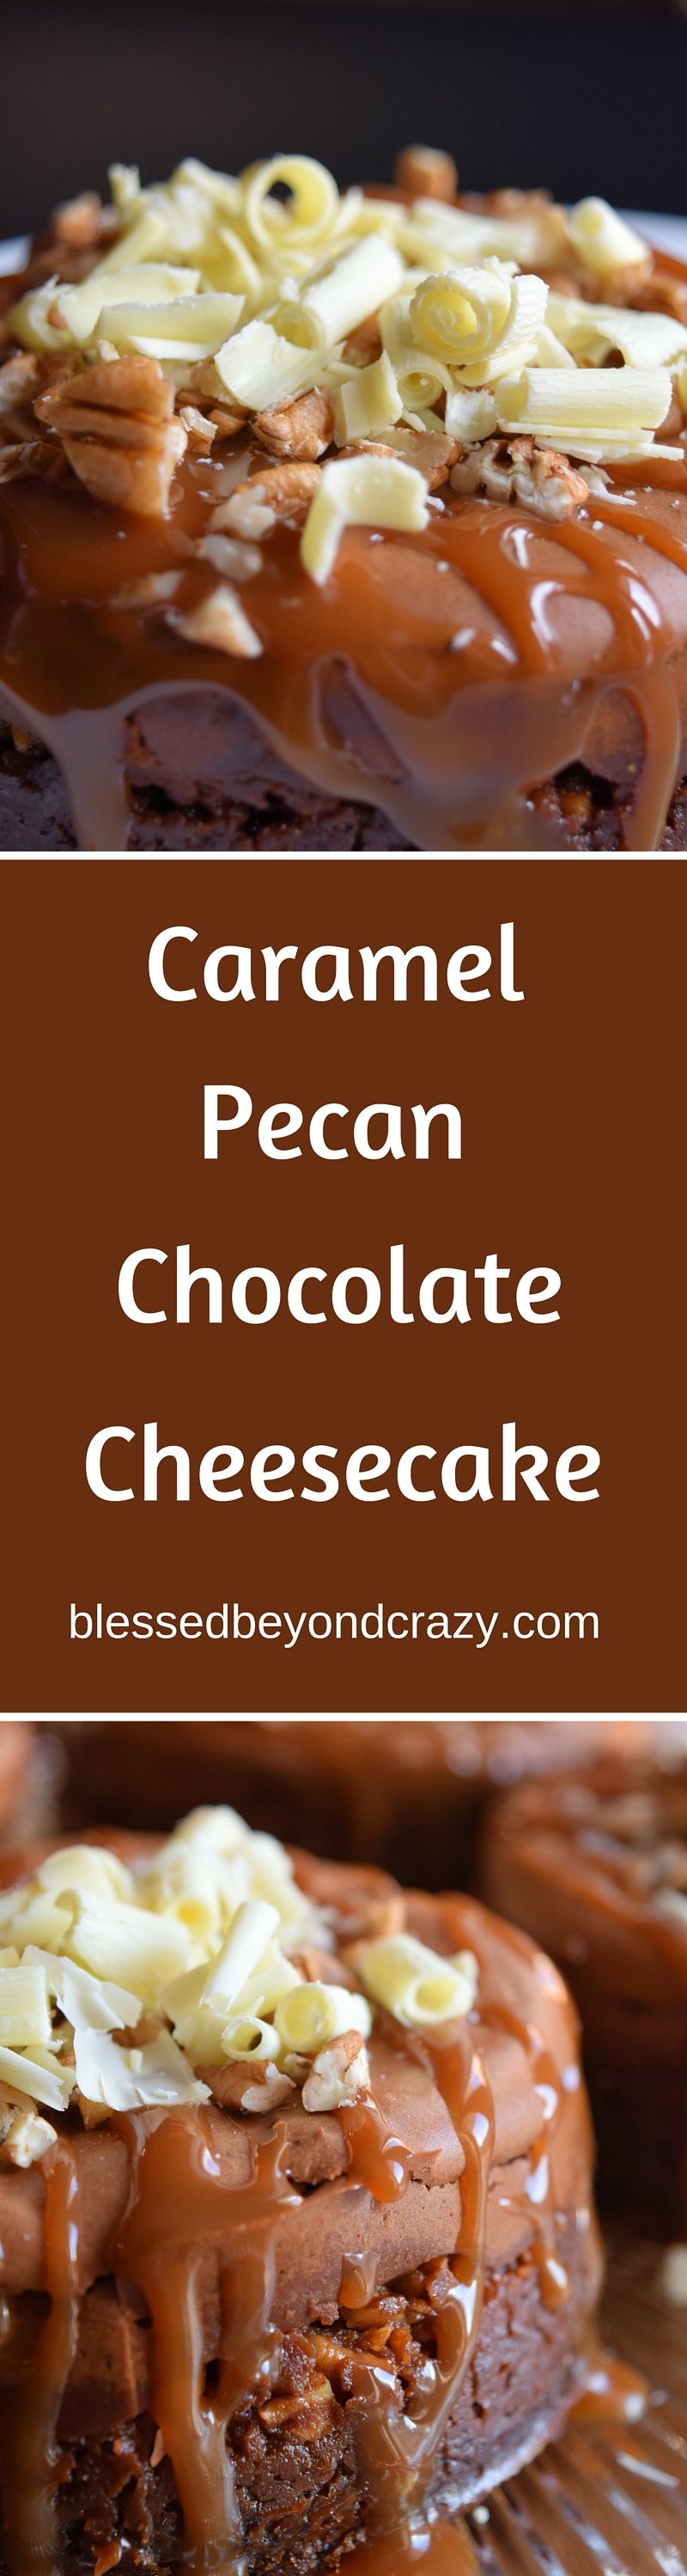 Caramel Pecan Chocolate Cheesecake